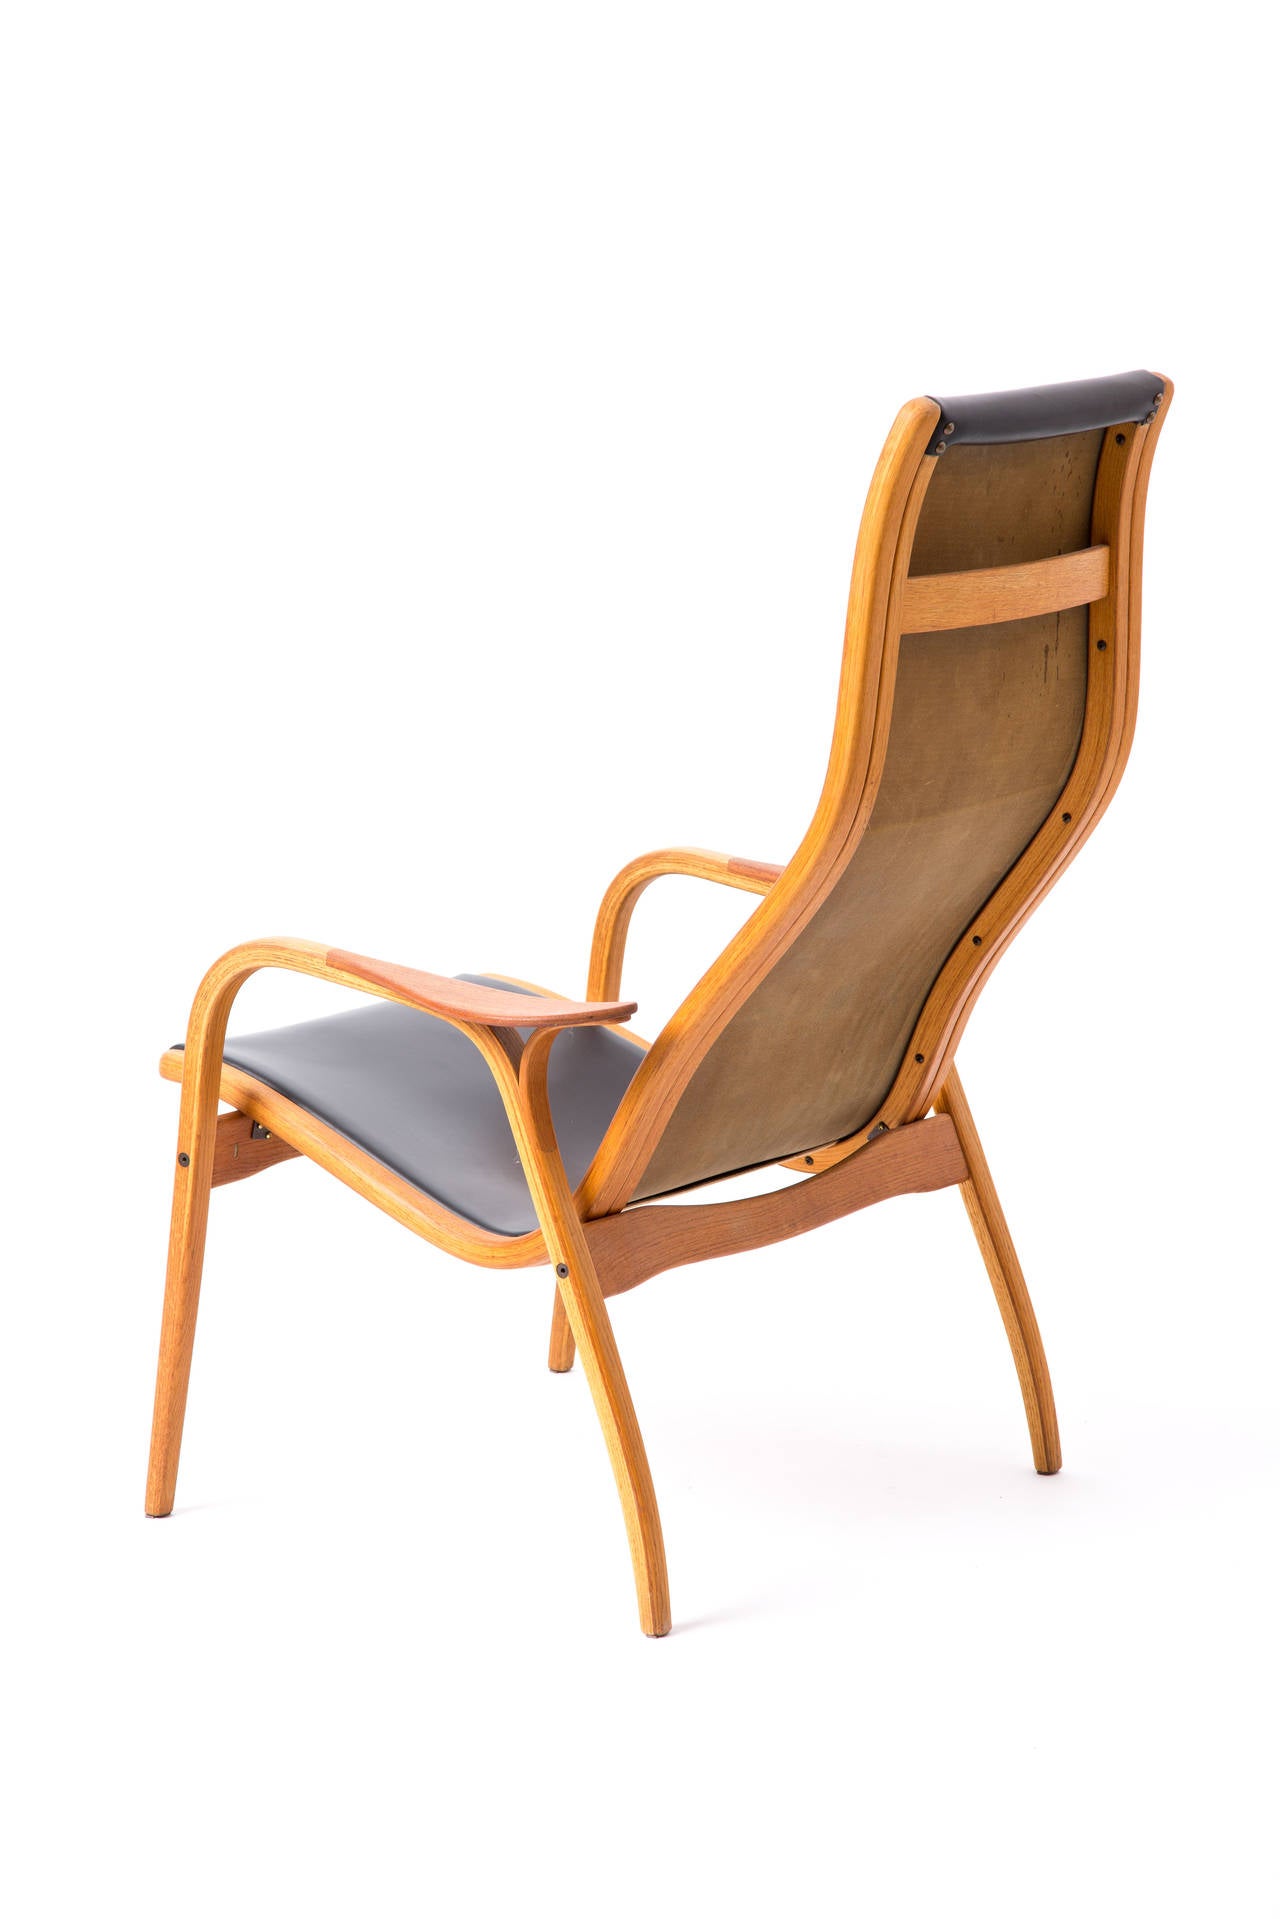 Scandinavian Modern Swedish Lamino Swedese Teak and Leather Chairs